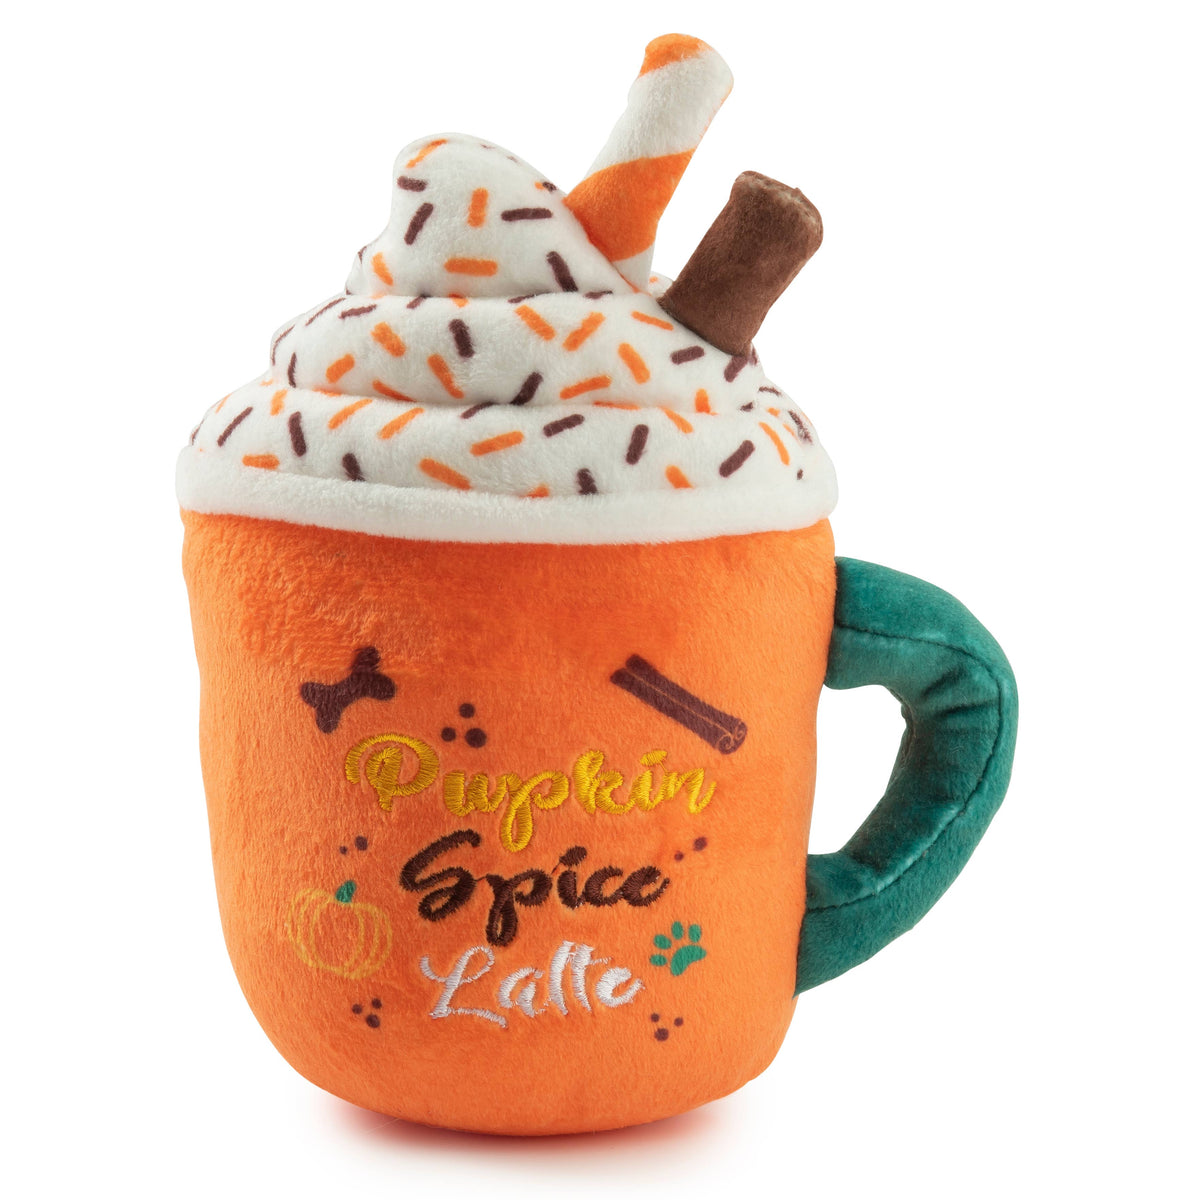 Pupkin Spice Latte Mug - The Preppy Bunny